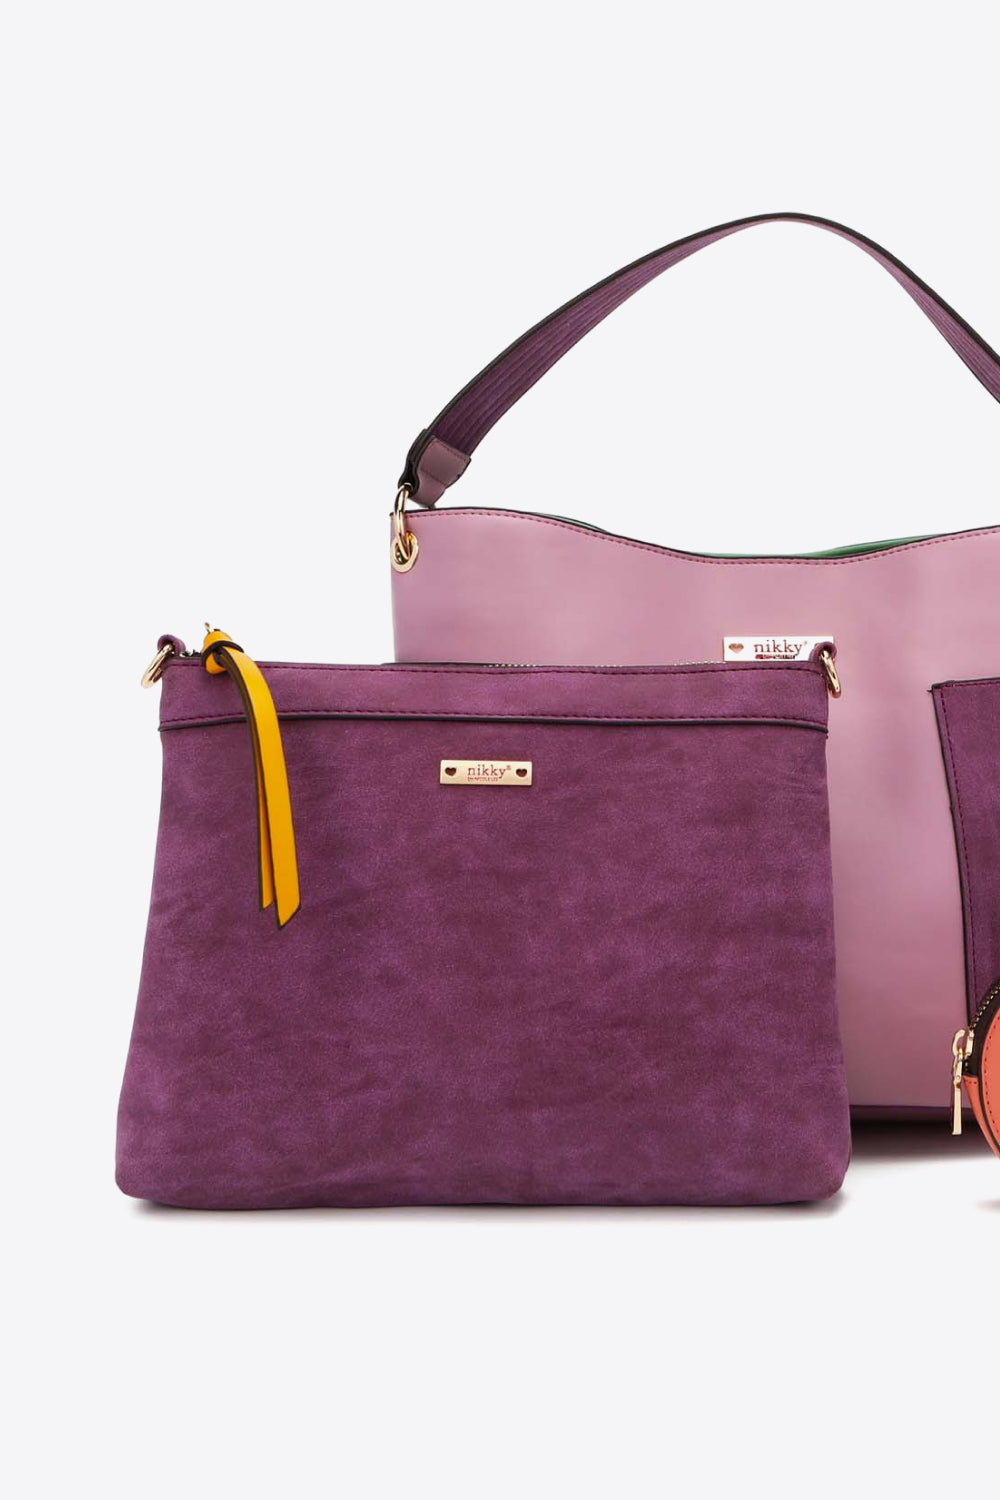 Nicole Lee USA Sweetheart Handbag Set - Dash Trend